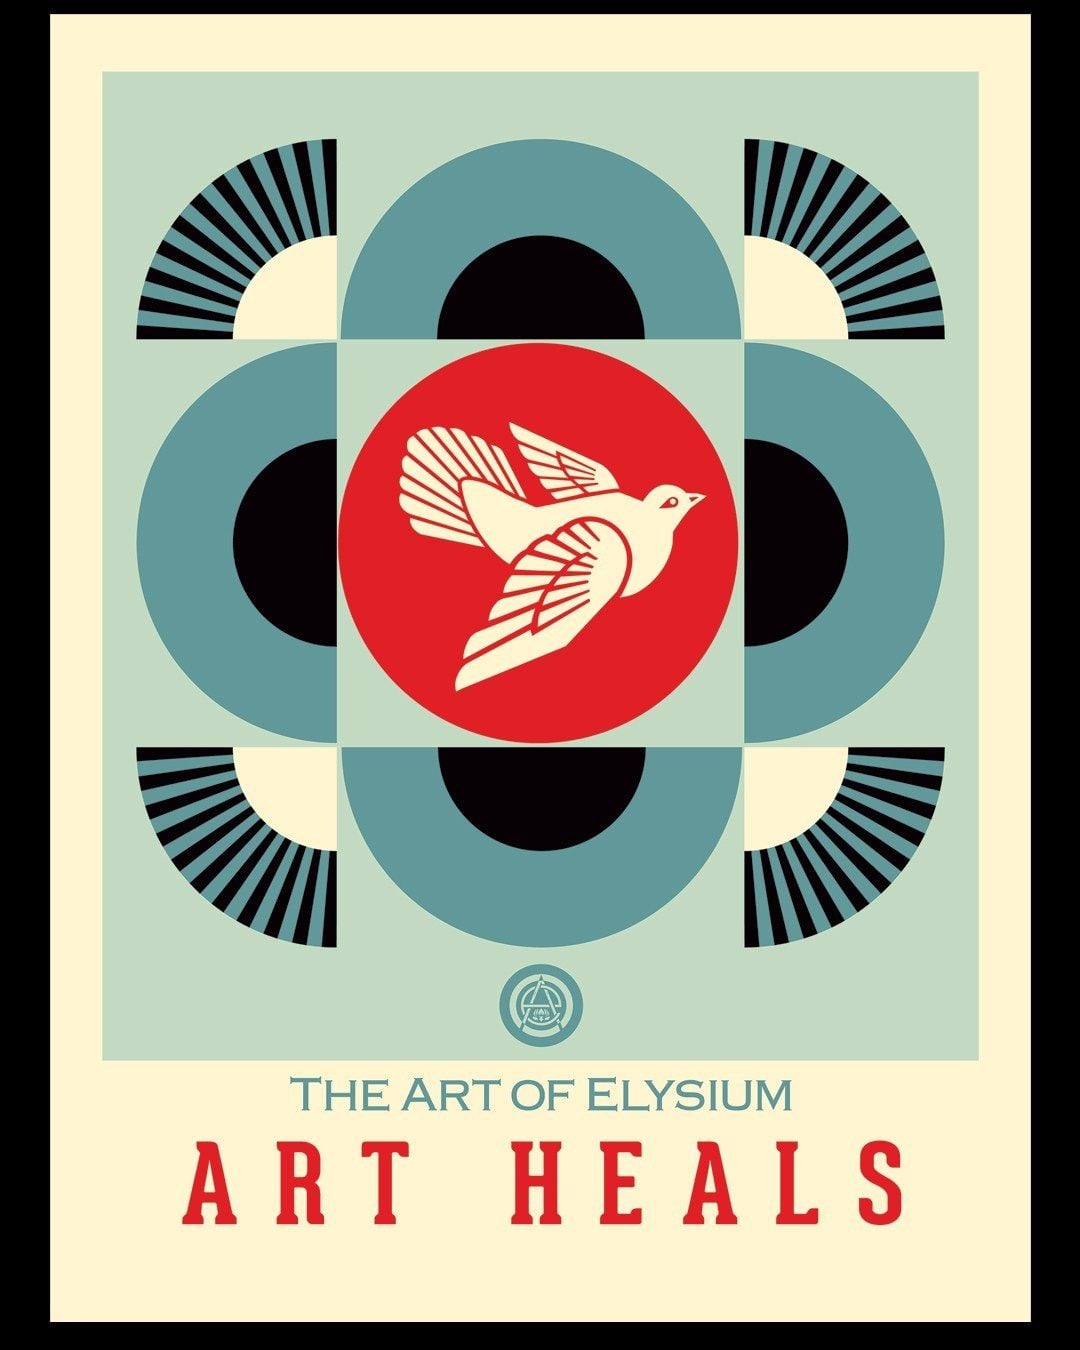 An original Shepard Fairey artwork made as part of the Art of Elysium's new #artheals campaign.